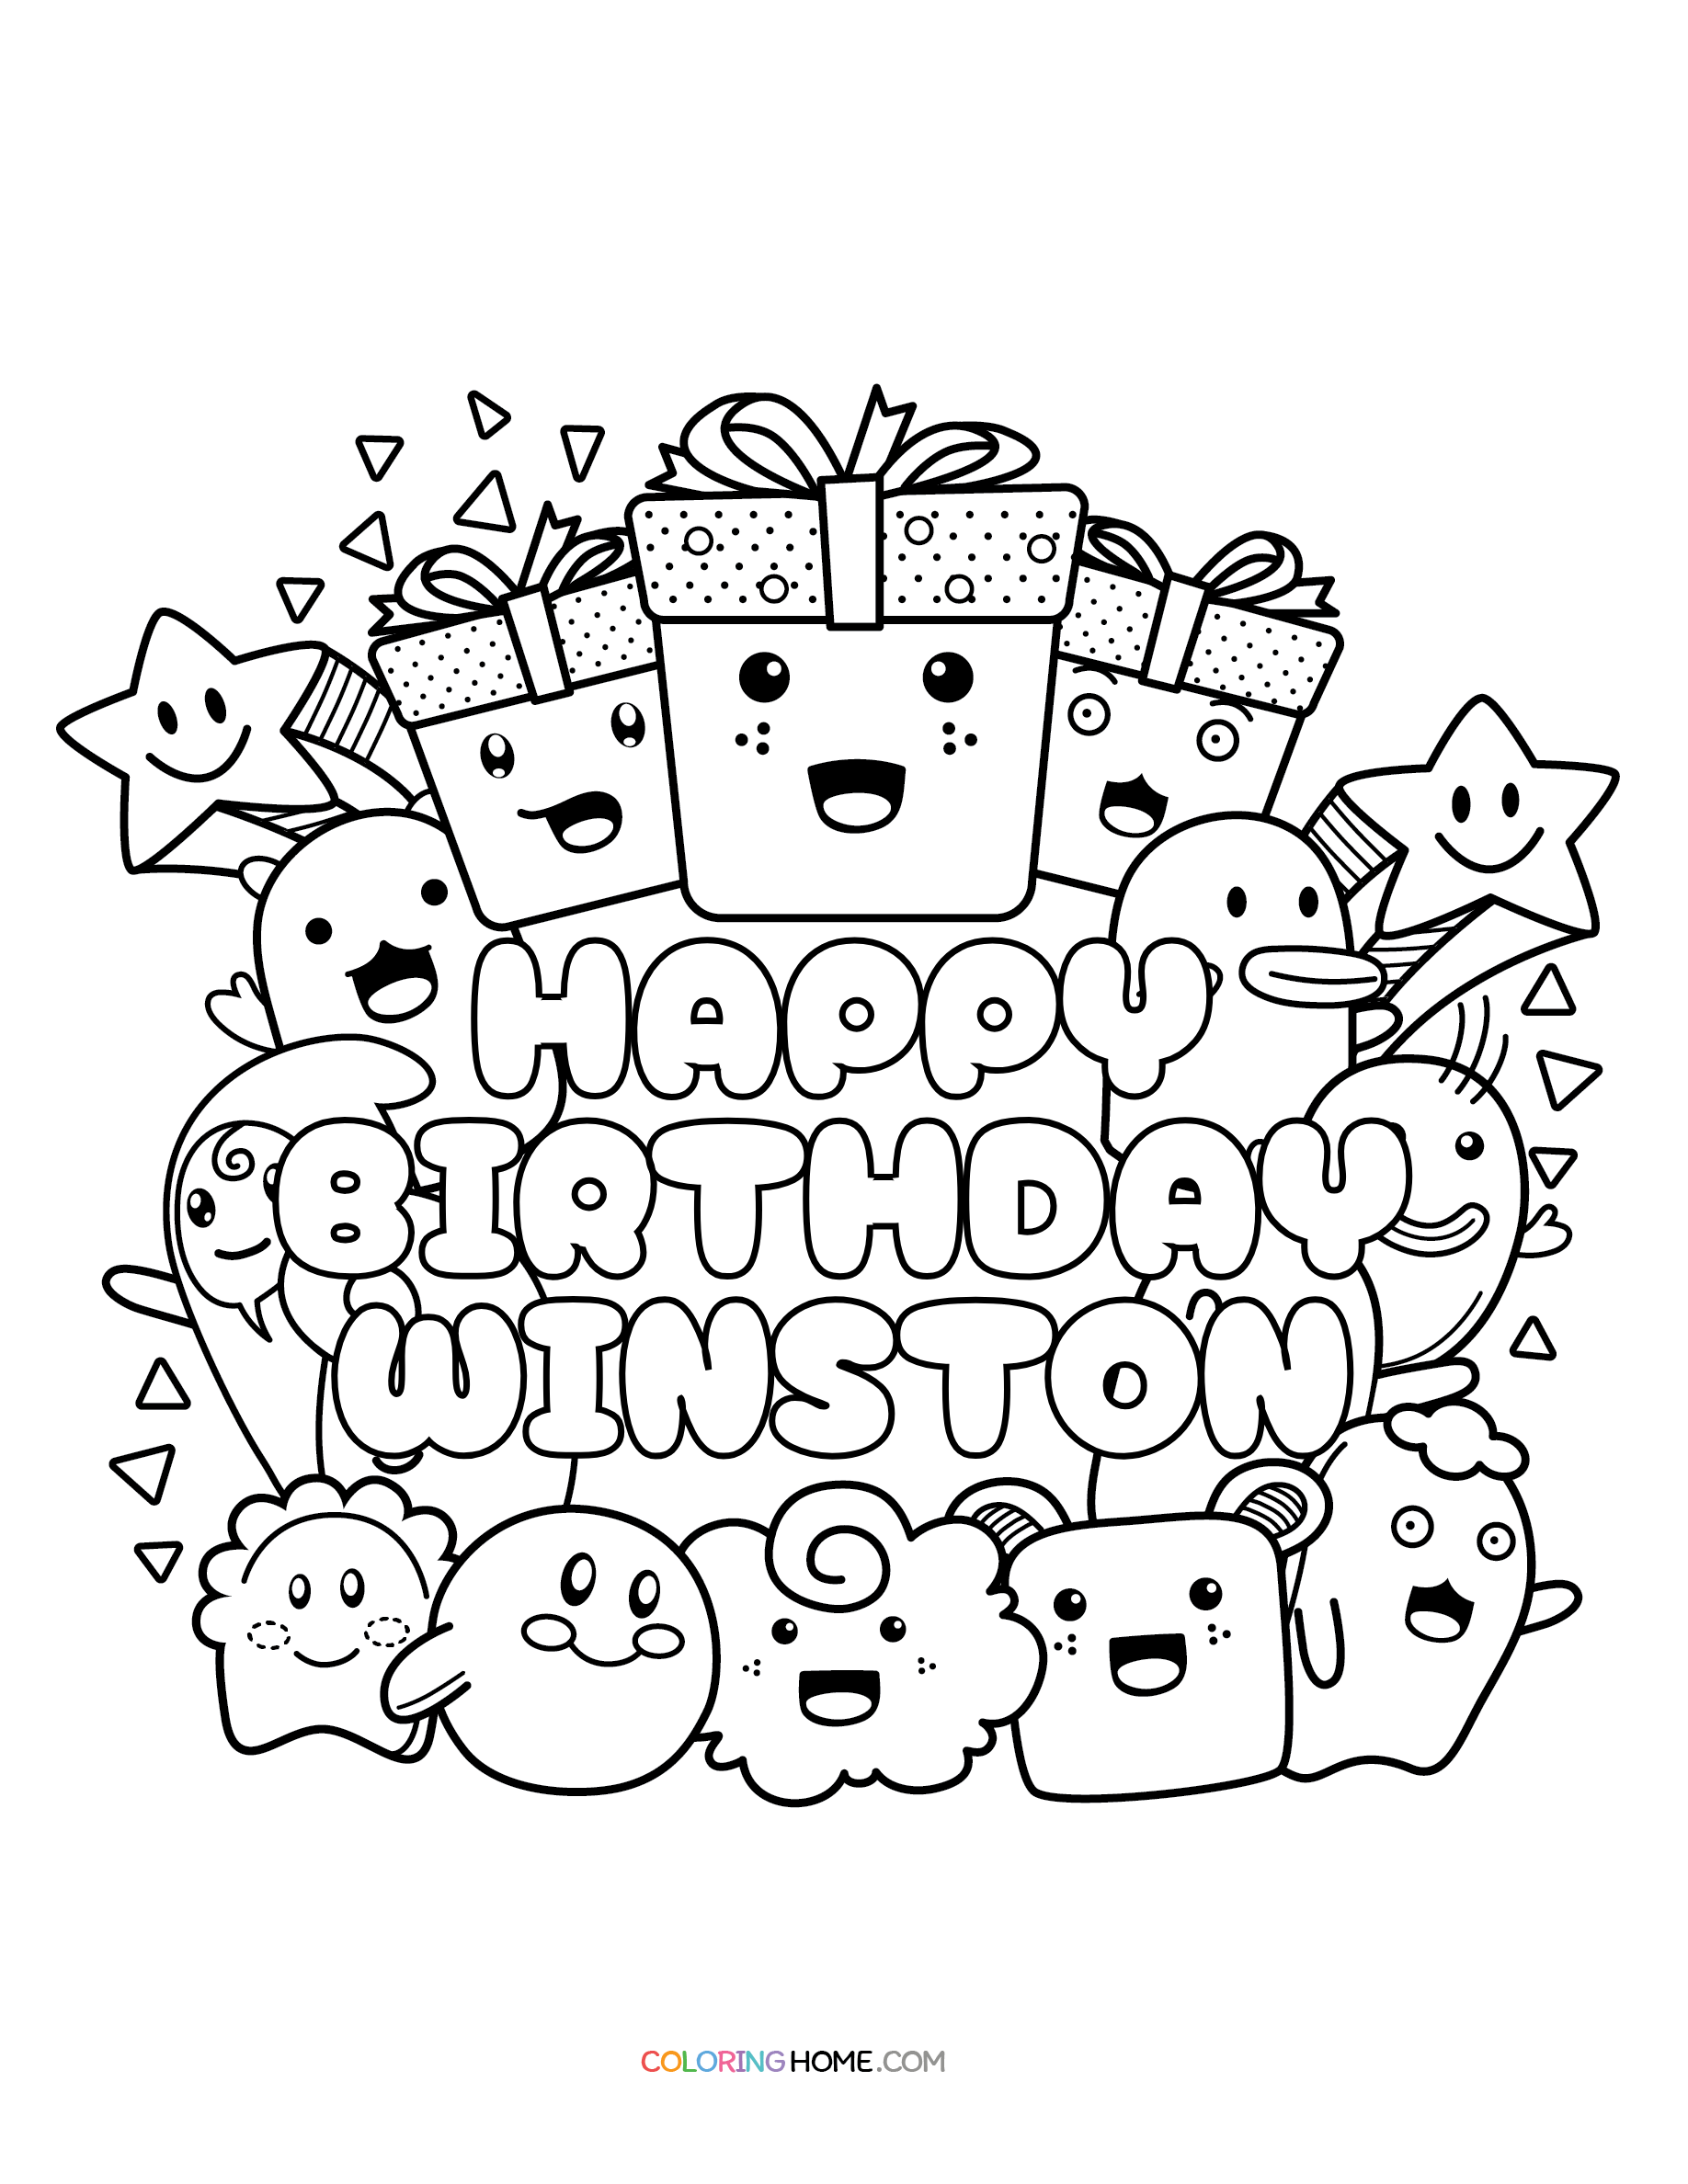 Happy Birthday Winston coloring page